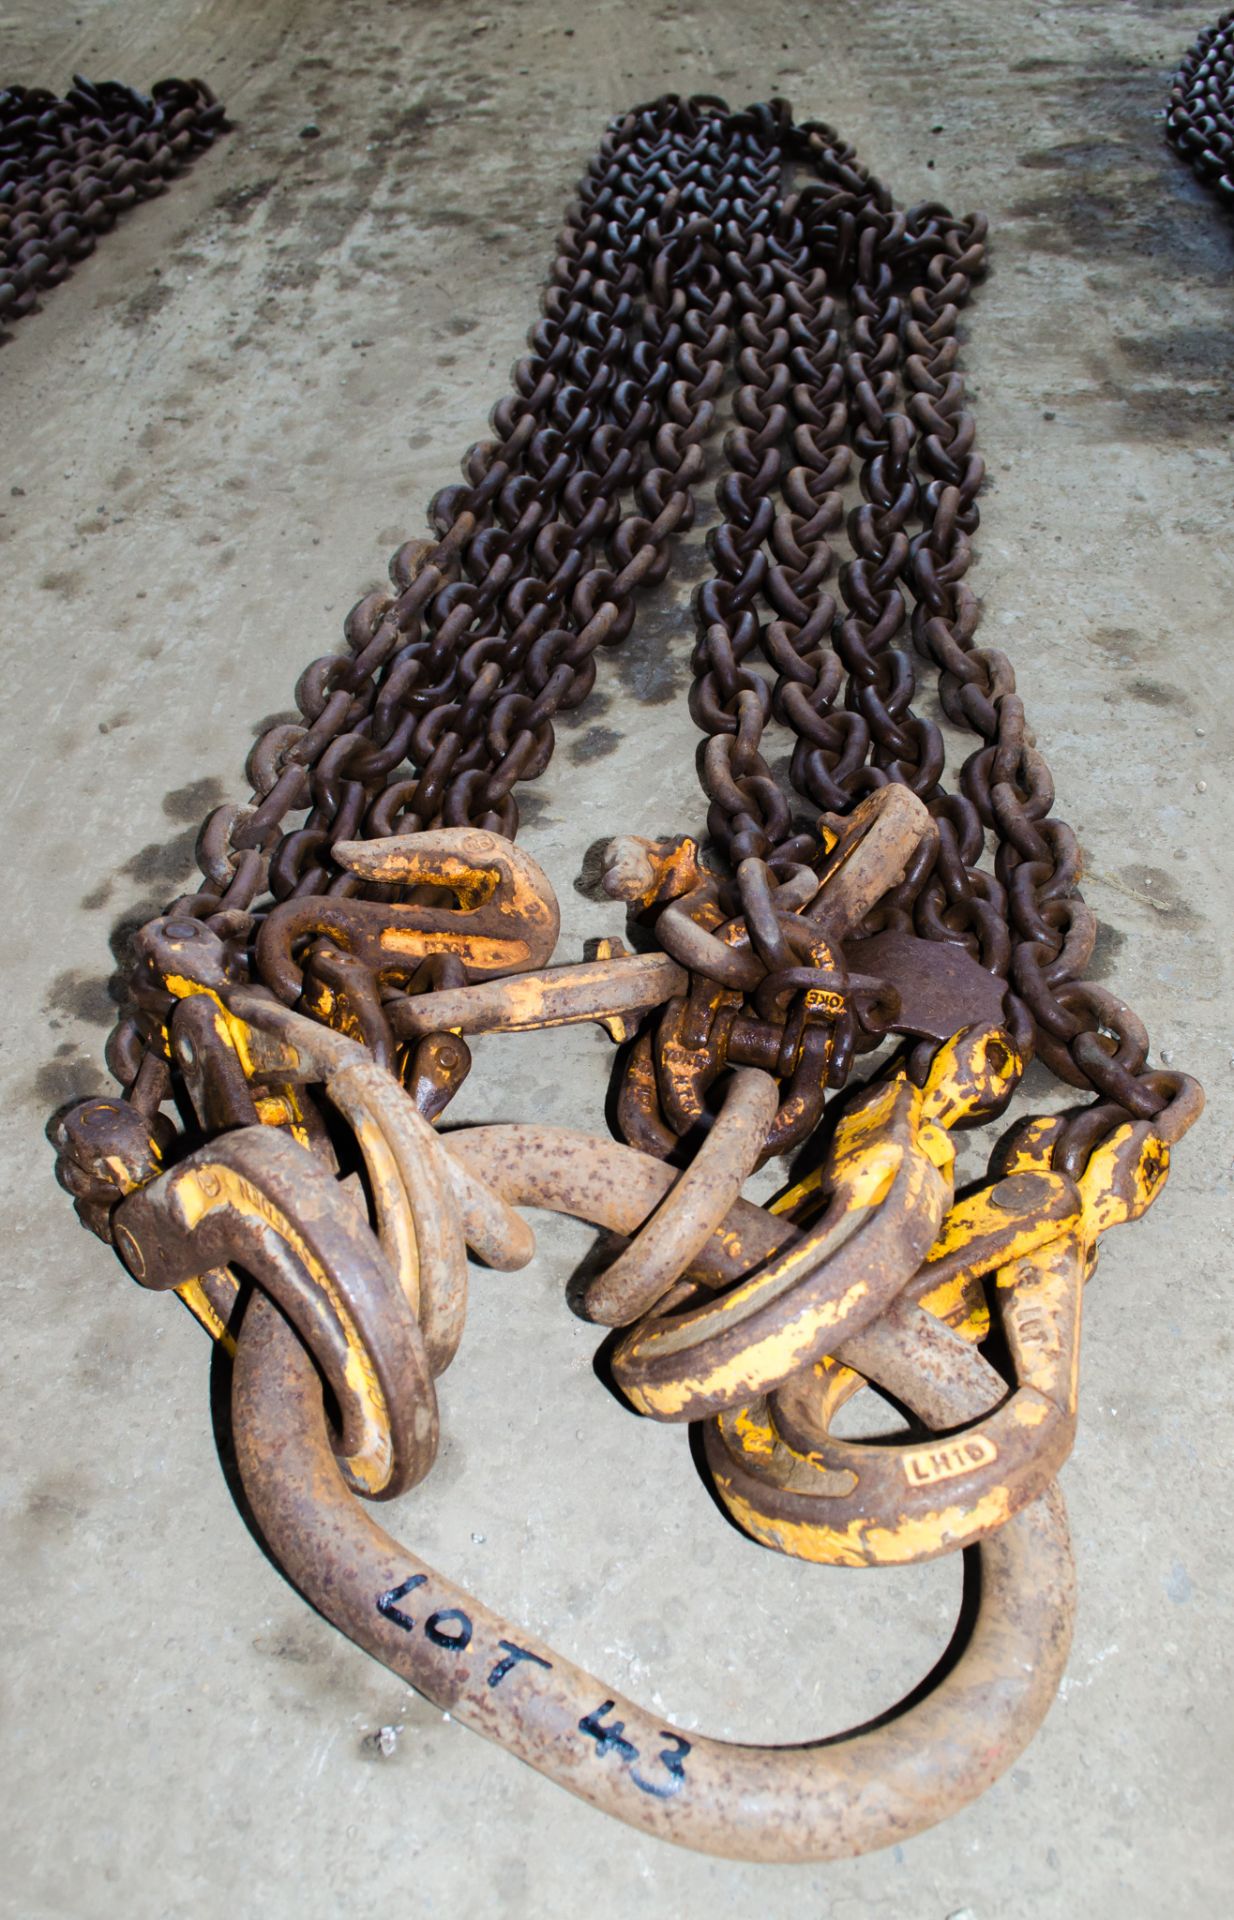 4 leg lifting chain